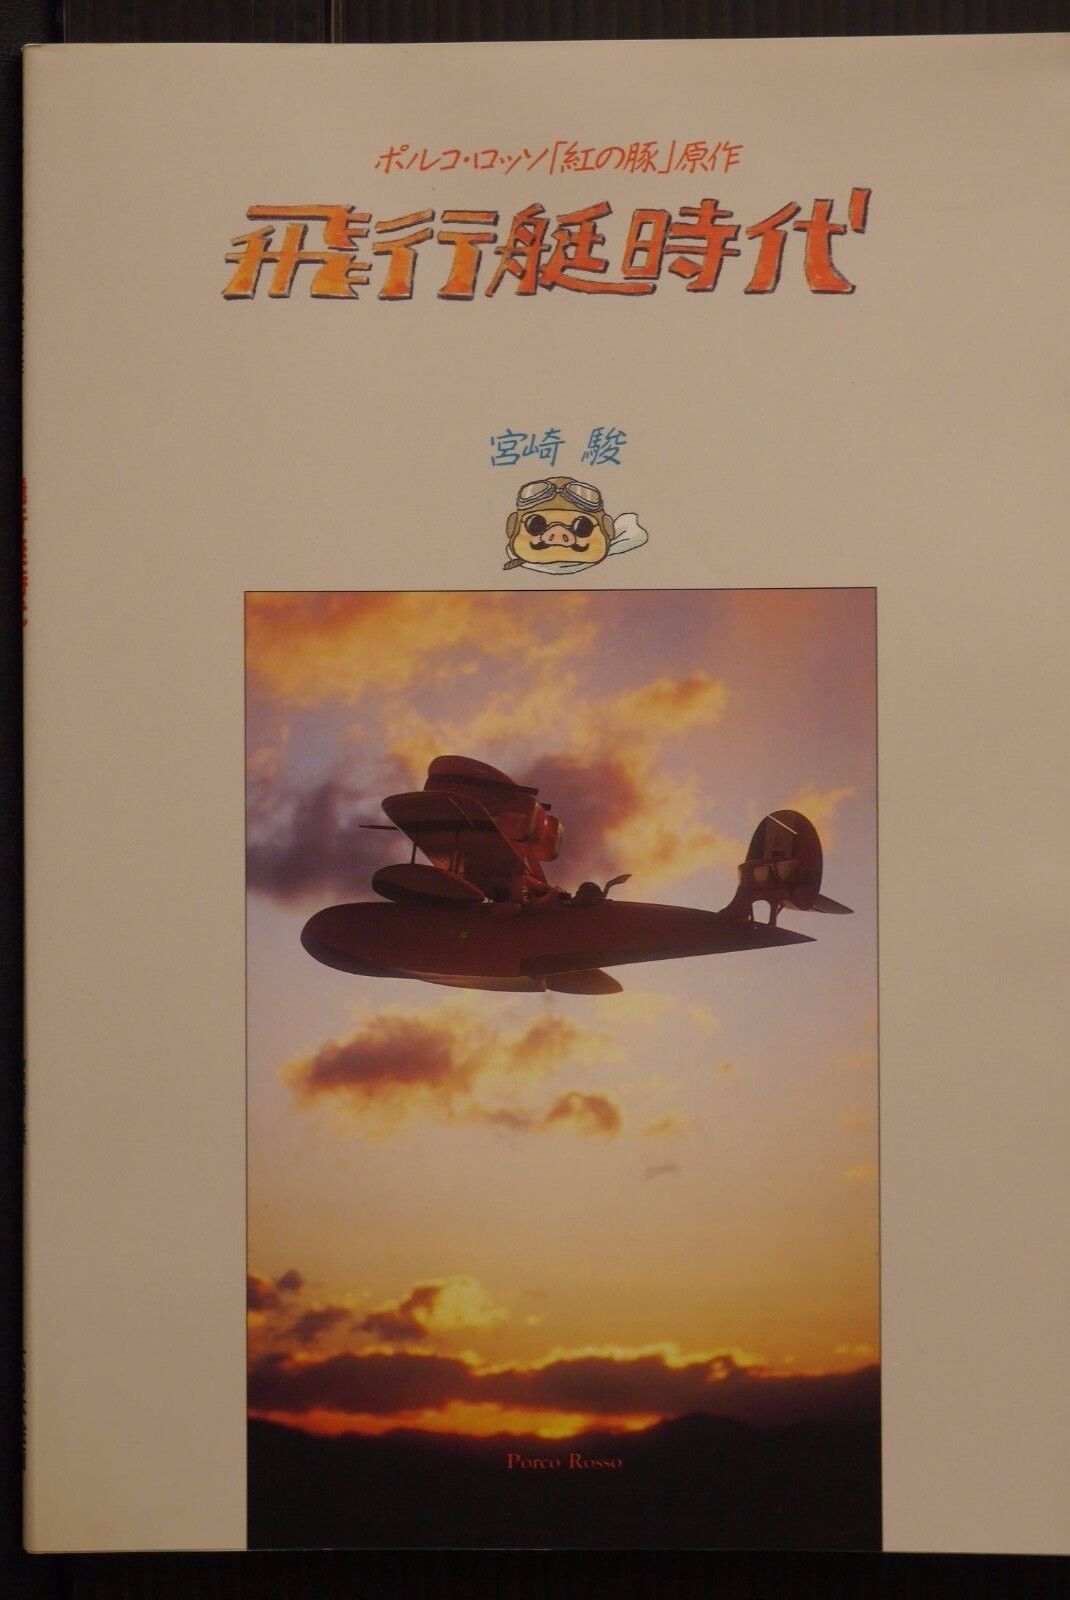 Hayao Miyazaki: Porco Rosso Original Work Book - Hikoutei Flying Boat Jidai